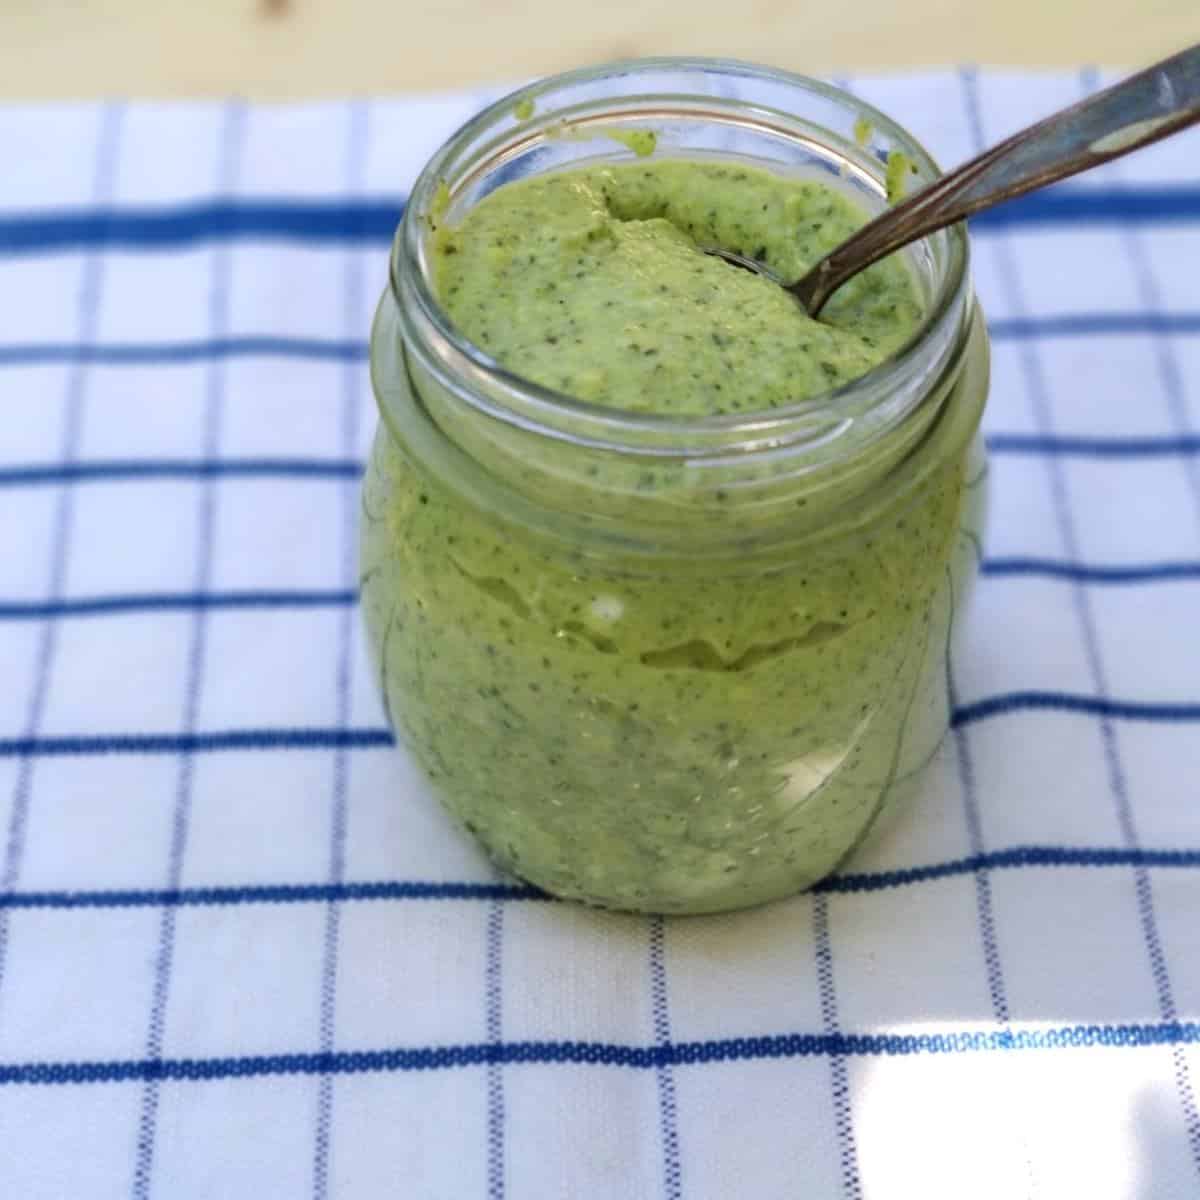 zucchini Pesto in a jar with a spoon inside